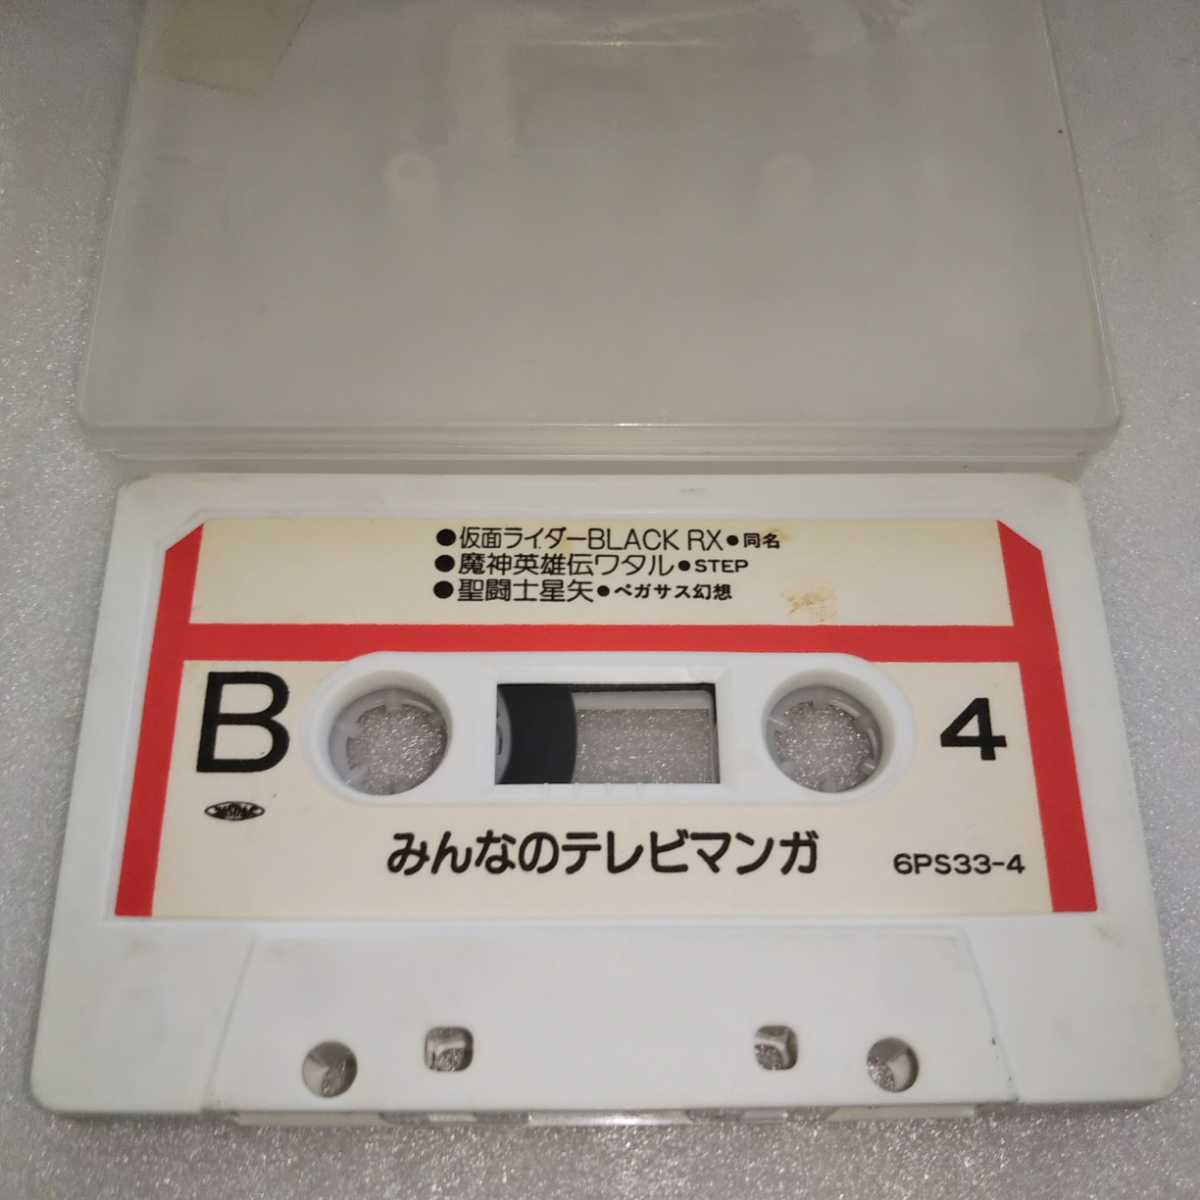  Pachi son all. tv manga 4 cassette tape jacket less The Sky Record of a War Shurat Esper Mami Kamen Rider BLACK RX Saint Seiya 